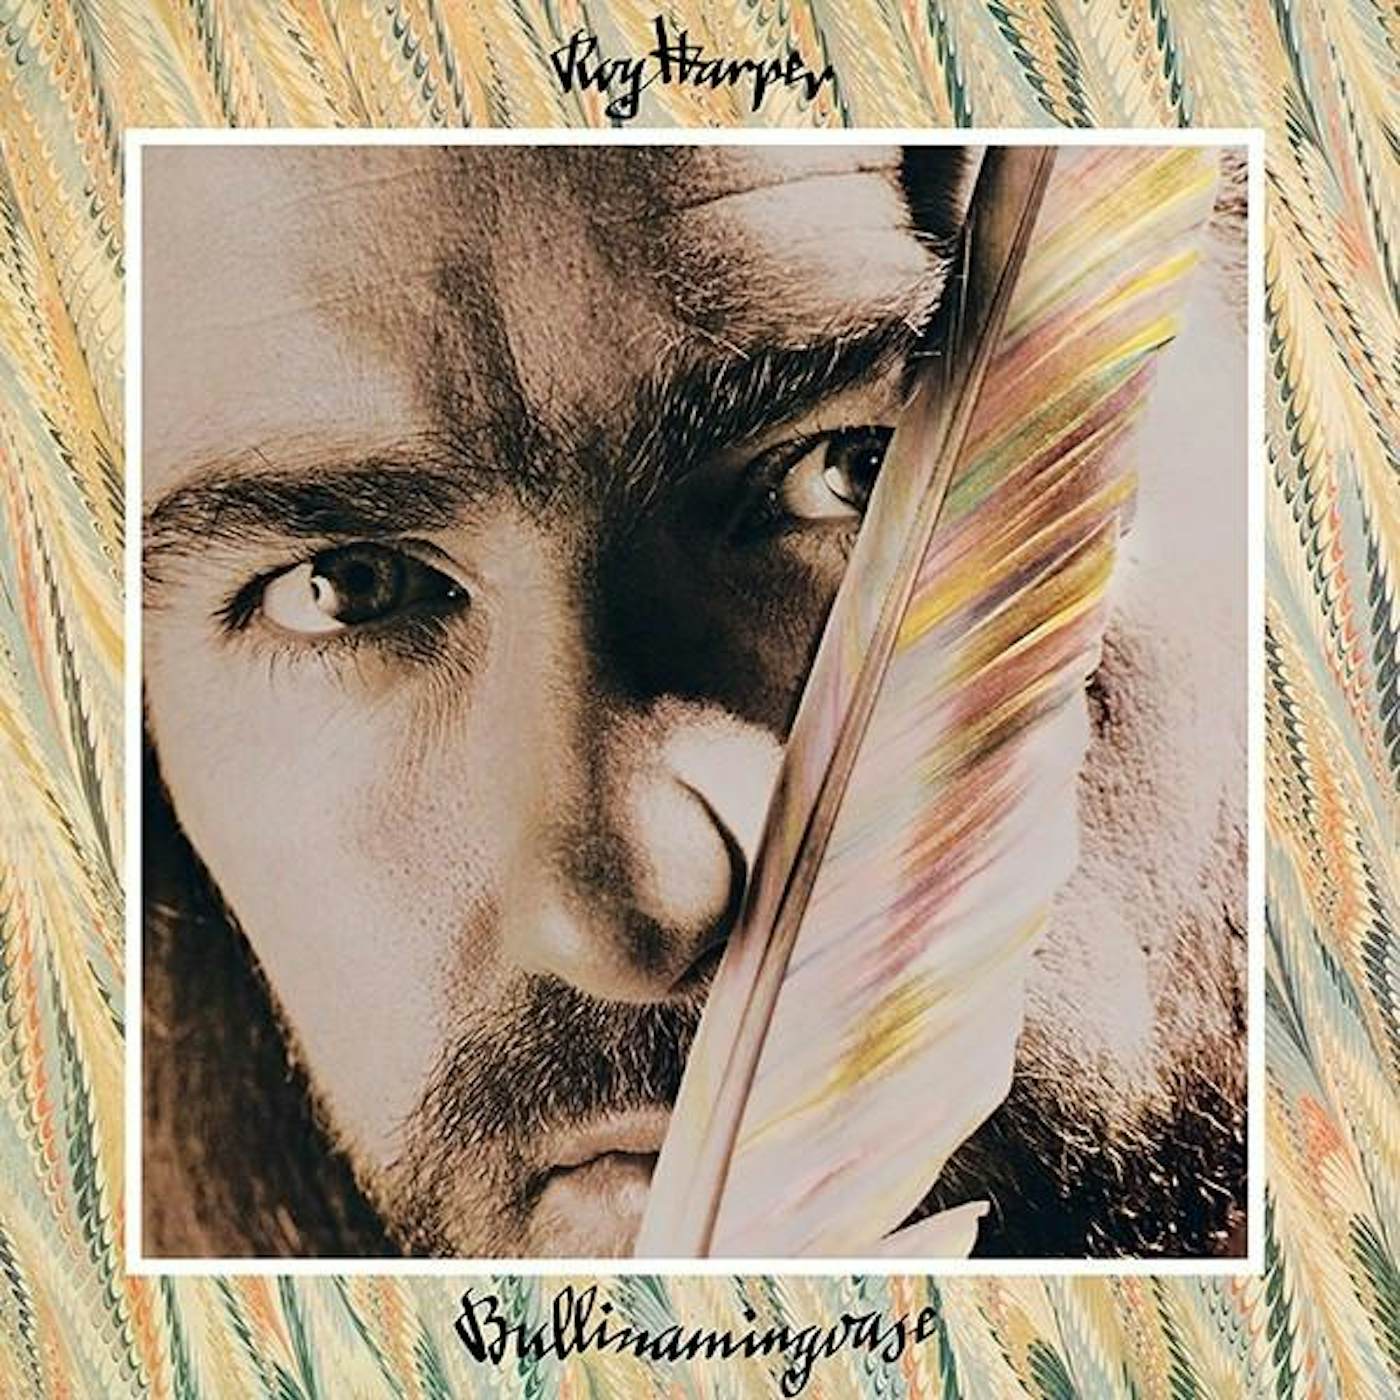 Roy Harper BULLINAMINGVASE (180G/REMASTER) Vinyl Record